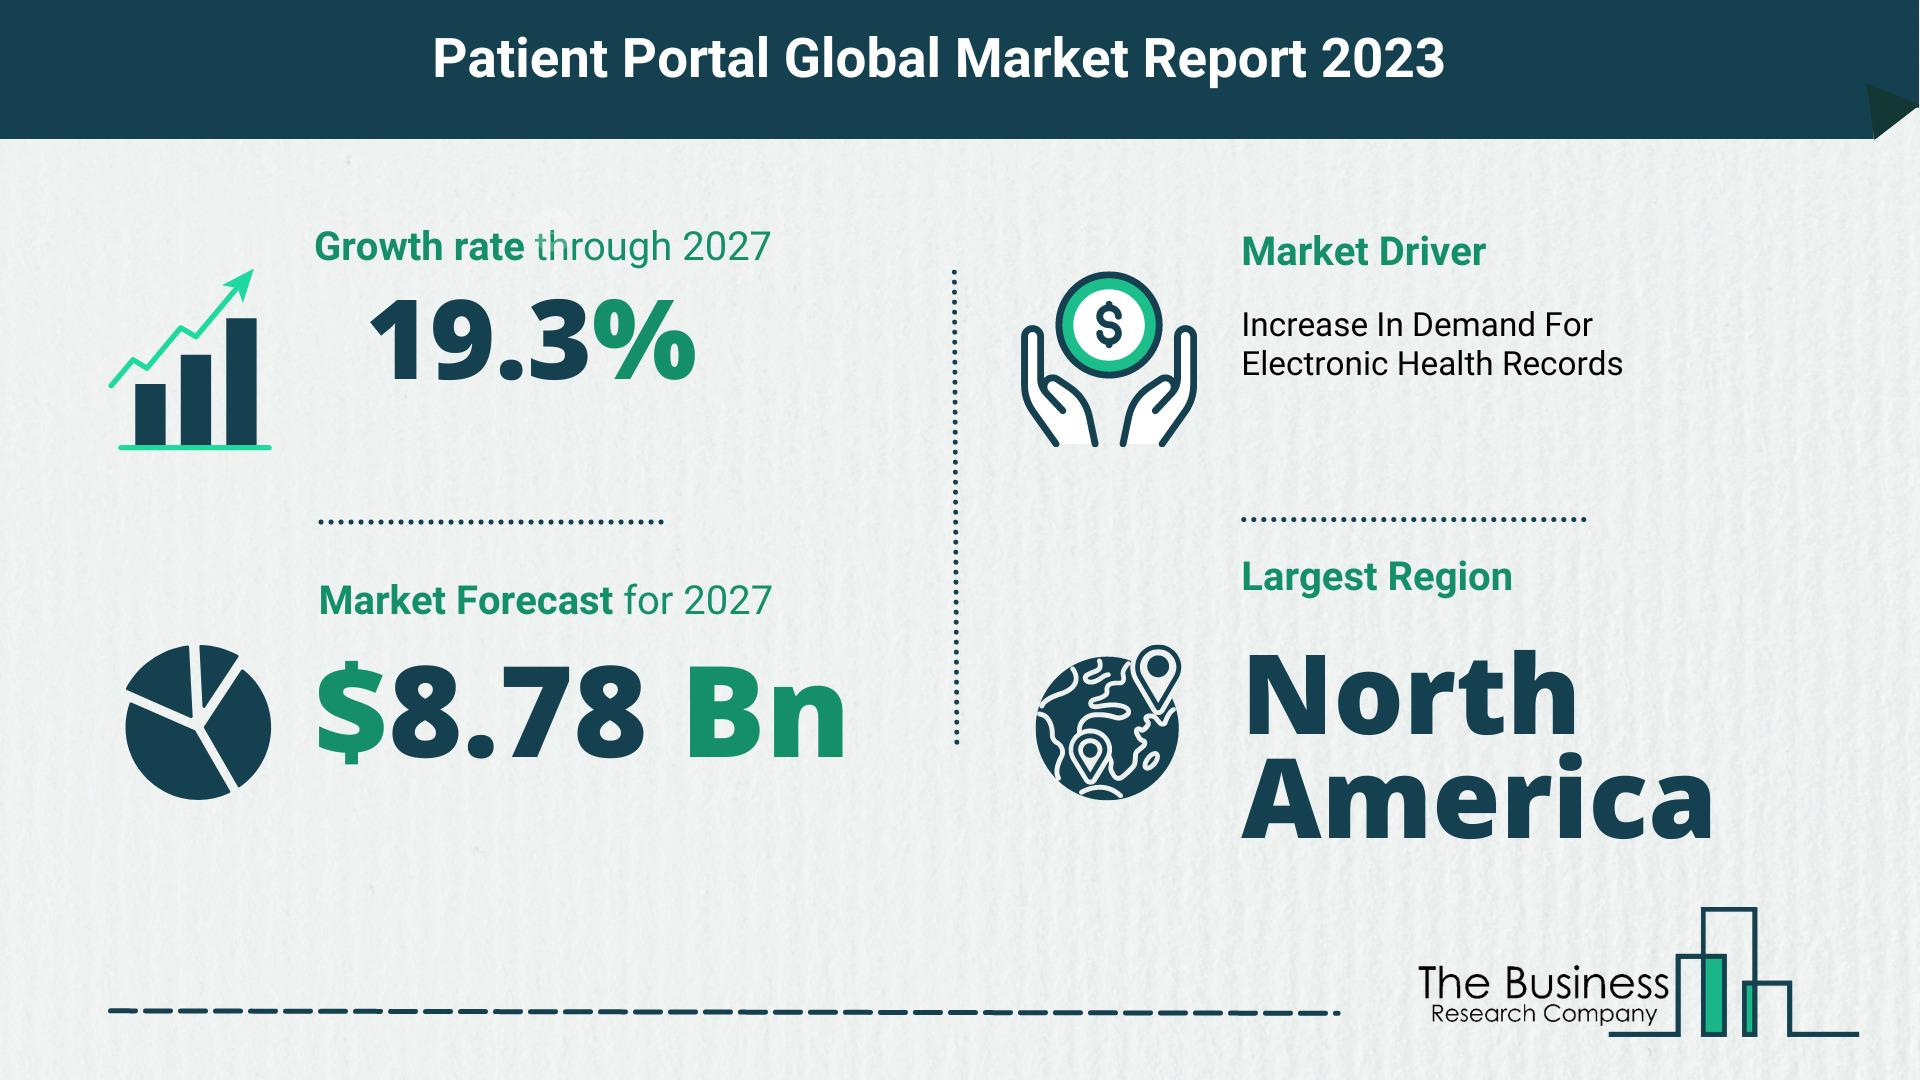 Global Patient Portal Market